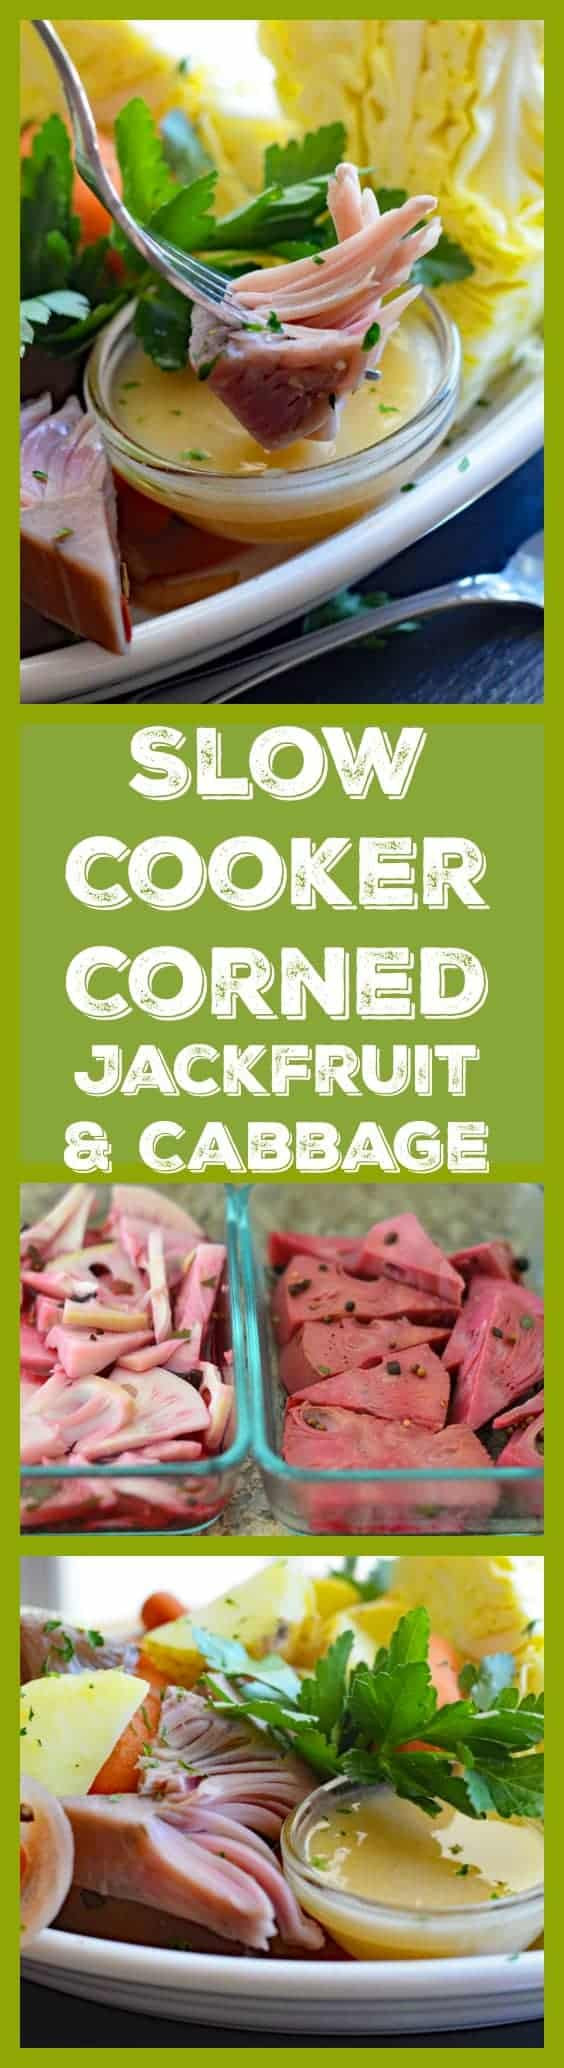 Slow Cooker Cabbage Recipes Vegetarian
 Slow Cooker Corned Jackfruit and Cabbage Living Vegan